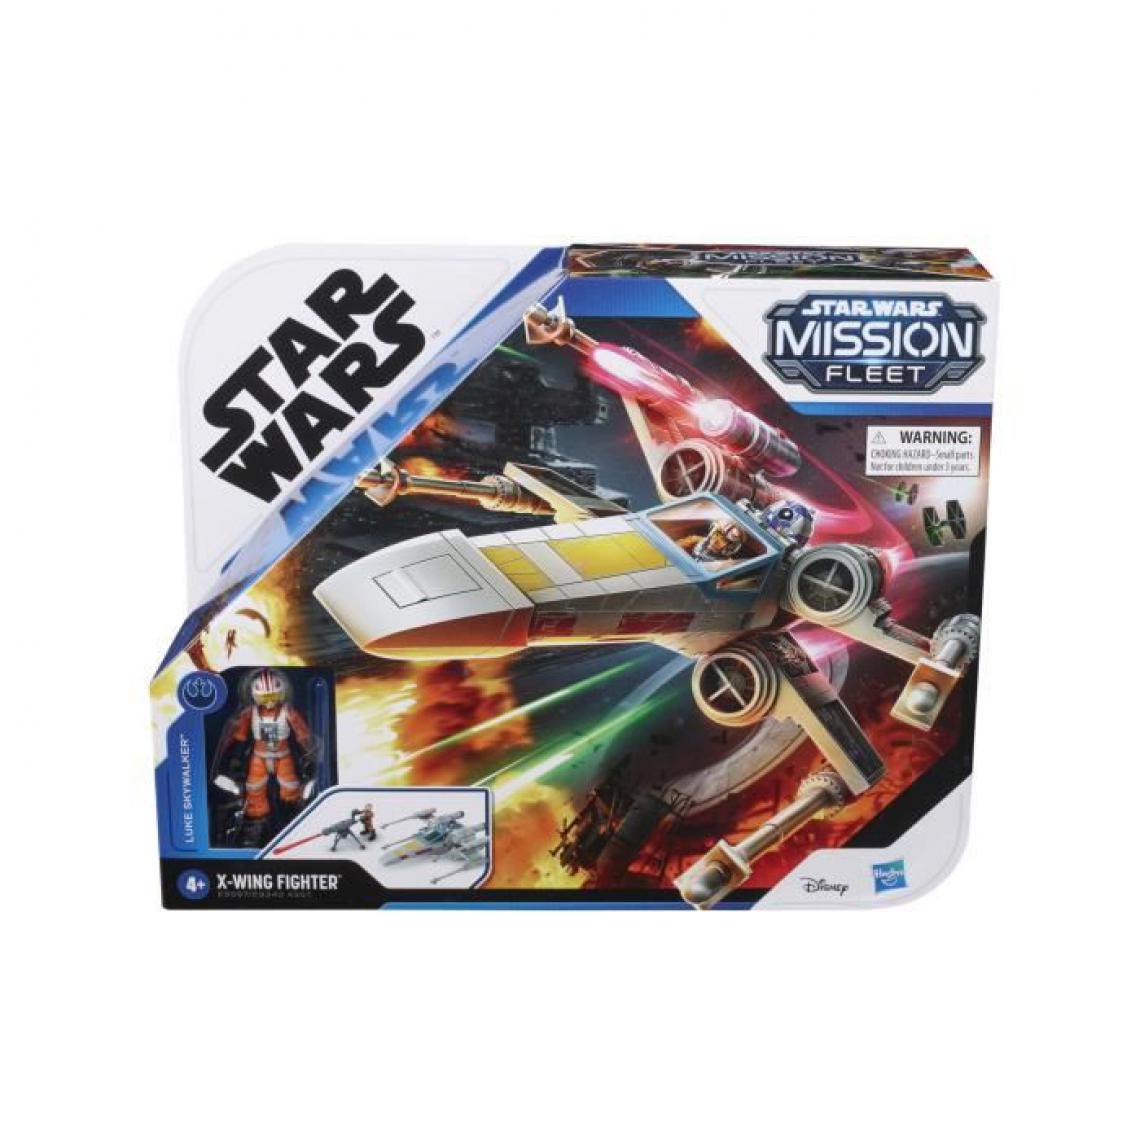 Hasbro - Star Wars Mission Fleet – Figurine Luke Skywalker et véhicule chasseur X-wing - 6 cm - Radios et servos